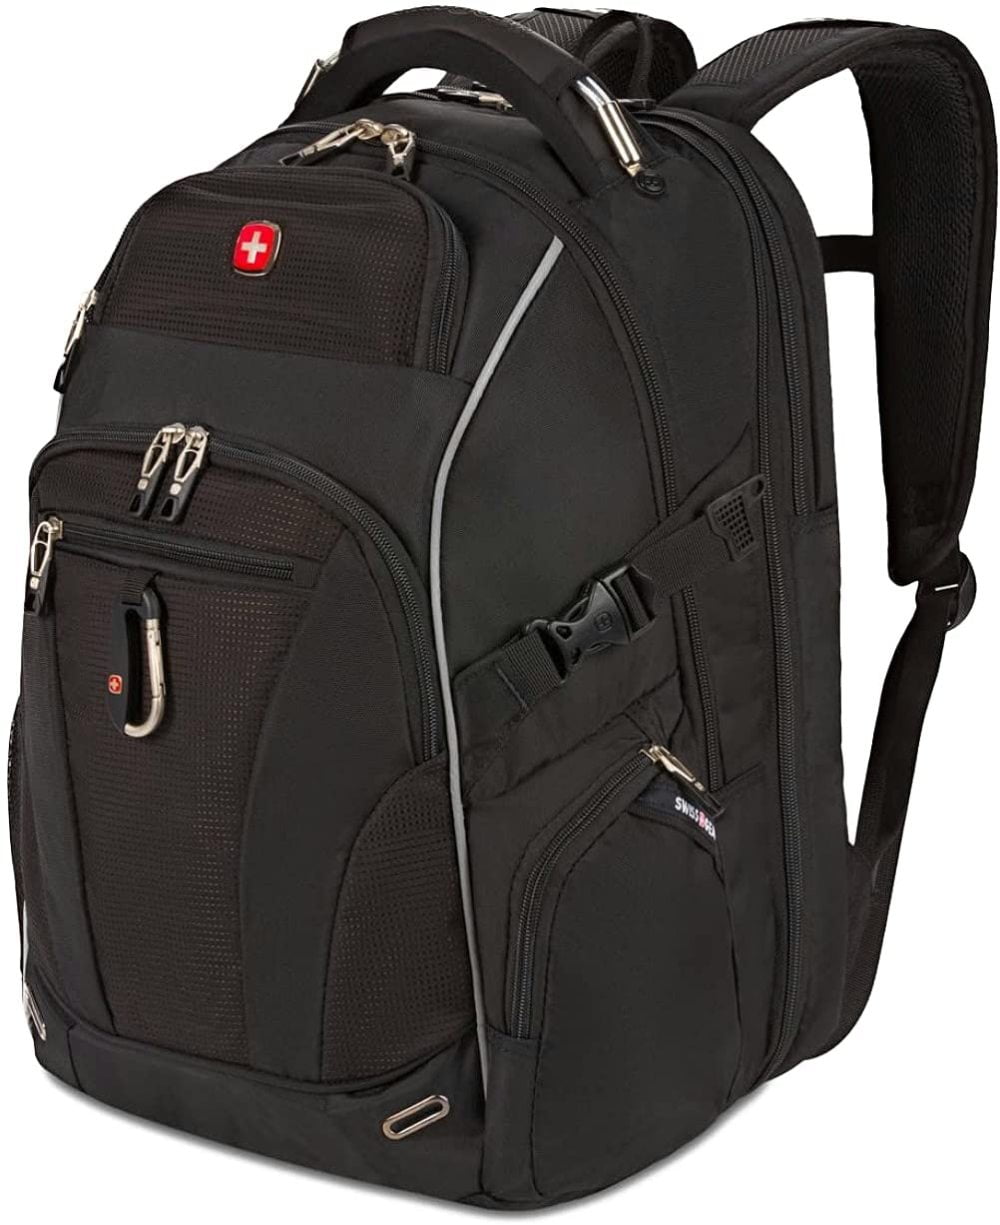 Swiss Gear Scan Smart Laptop Backpack SA6752 Black 15 inches - Walmart.com